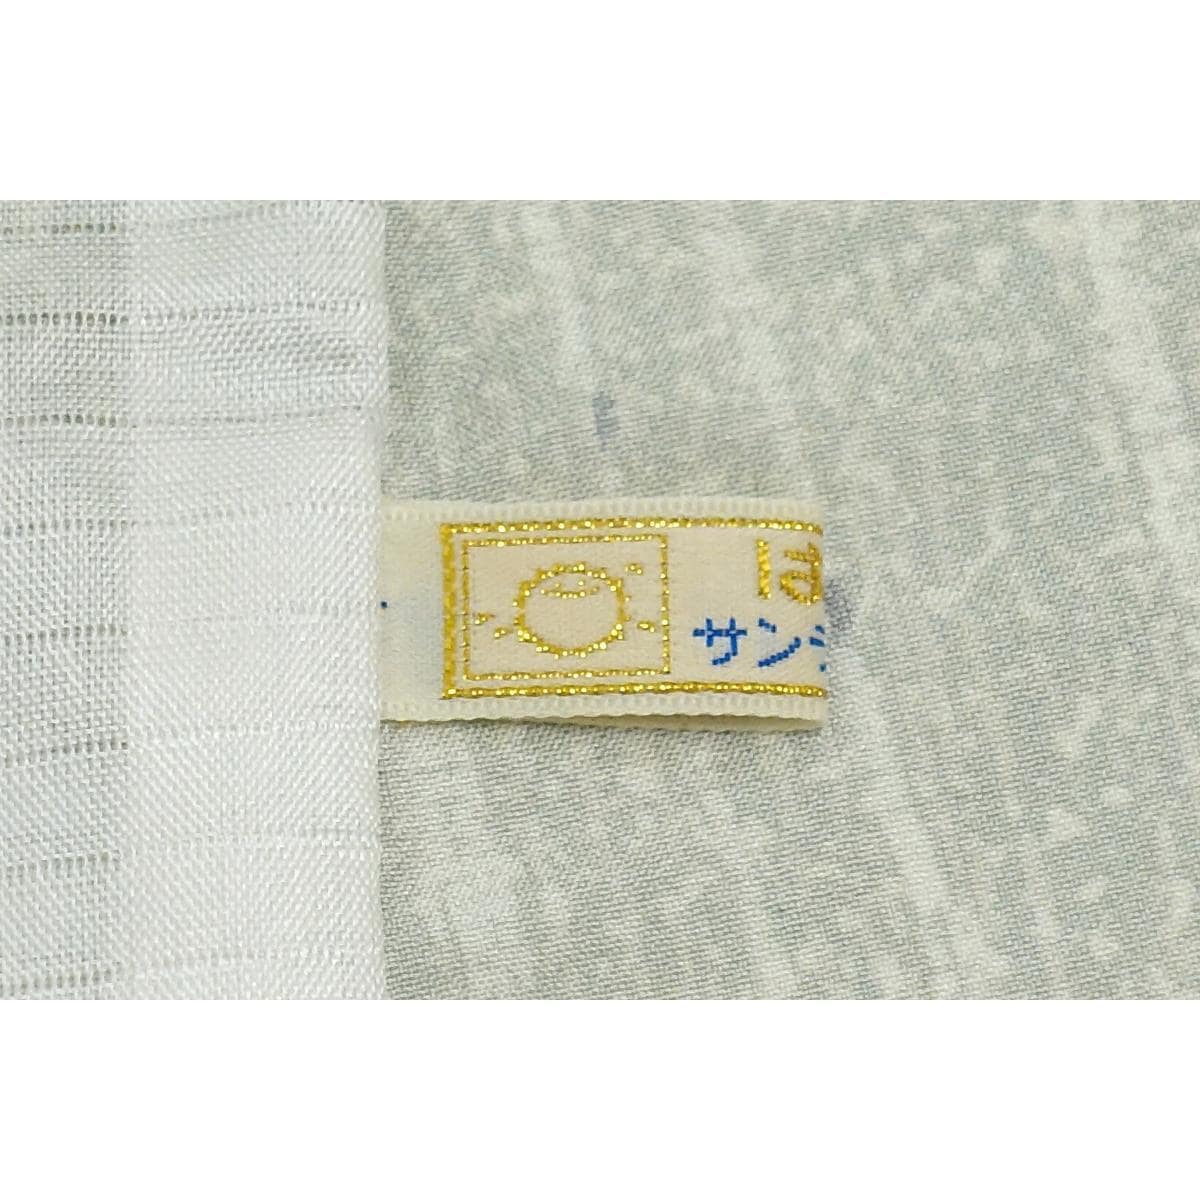 [Unused items] Single coat with Natsu Ushikubi Tsumugi certificate stamp